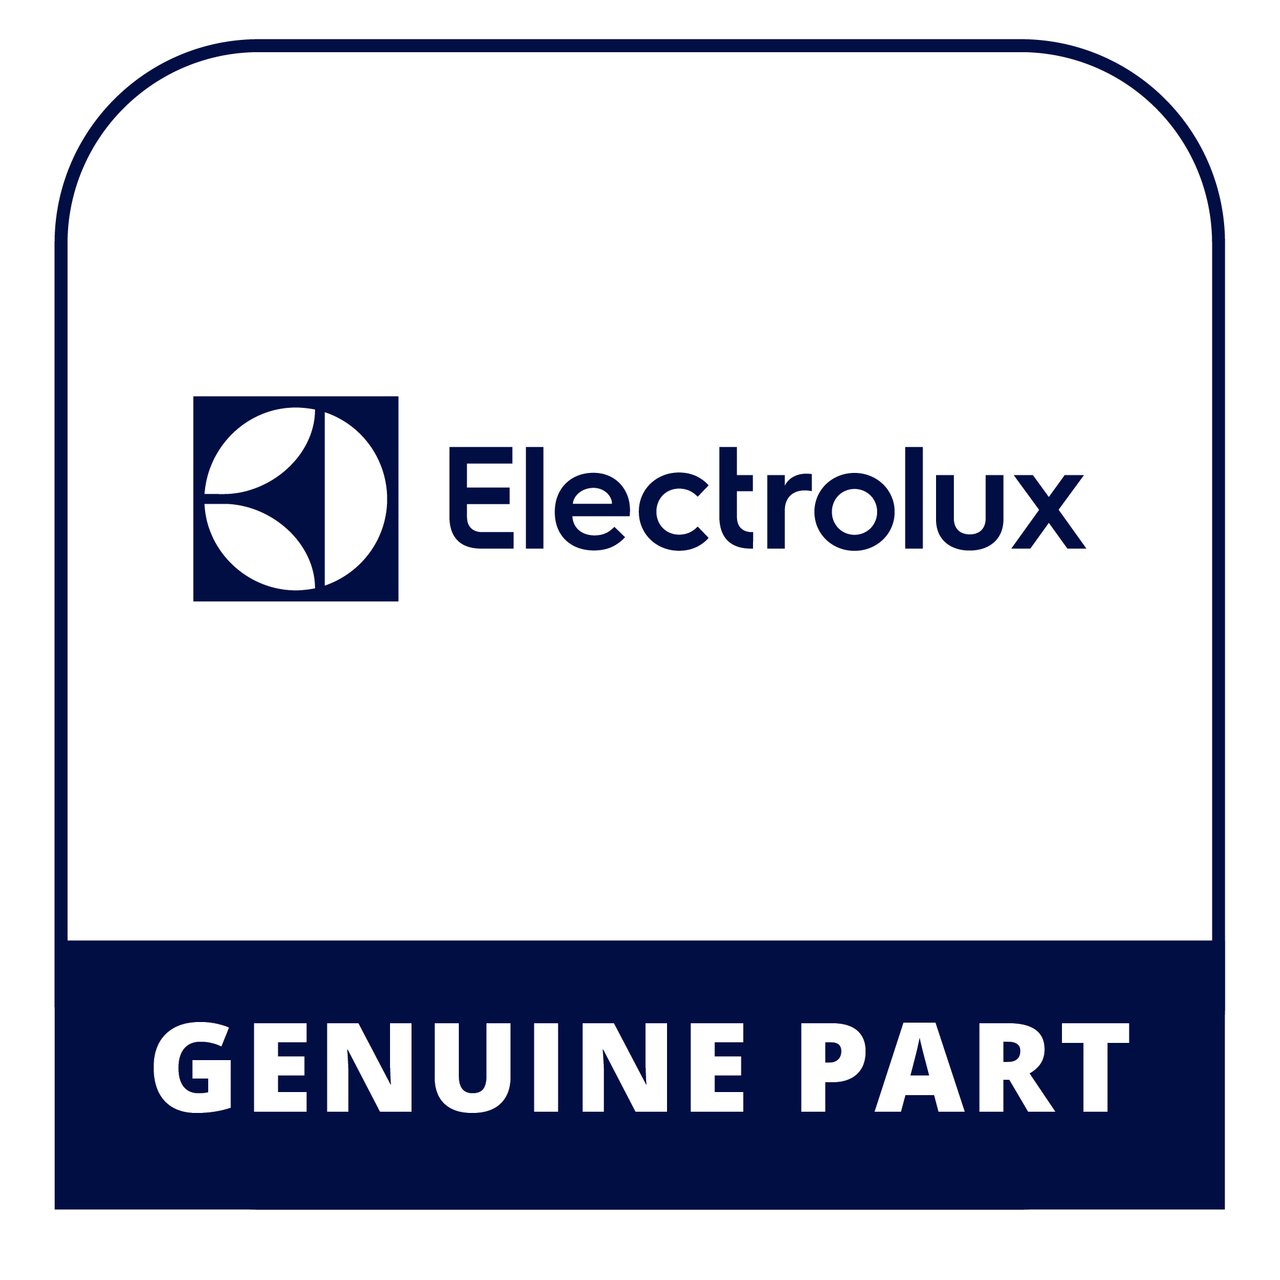 Frigidaire - Electrolux 305452151 Top - Genuine Electrolux Part